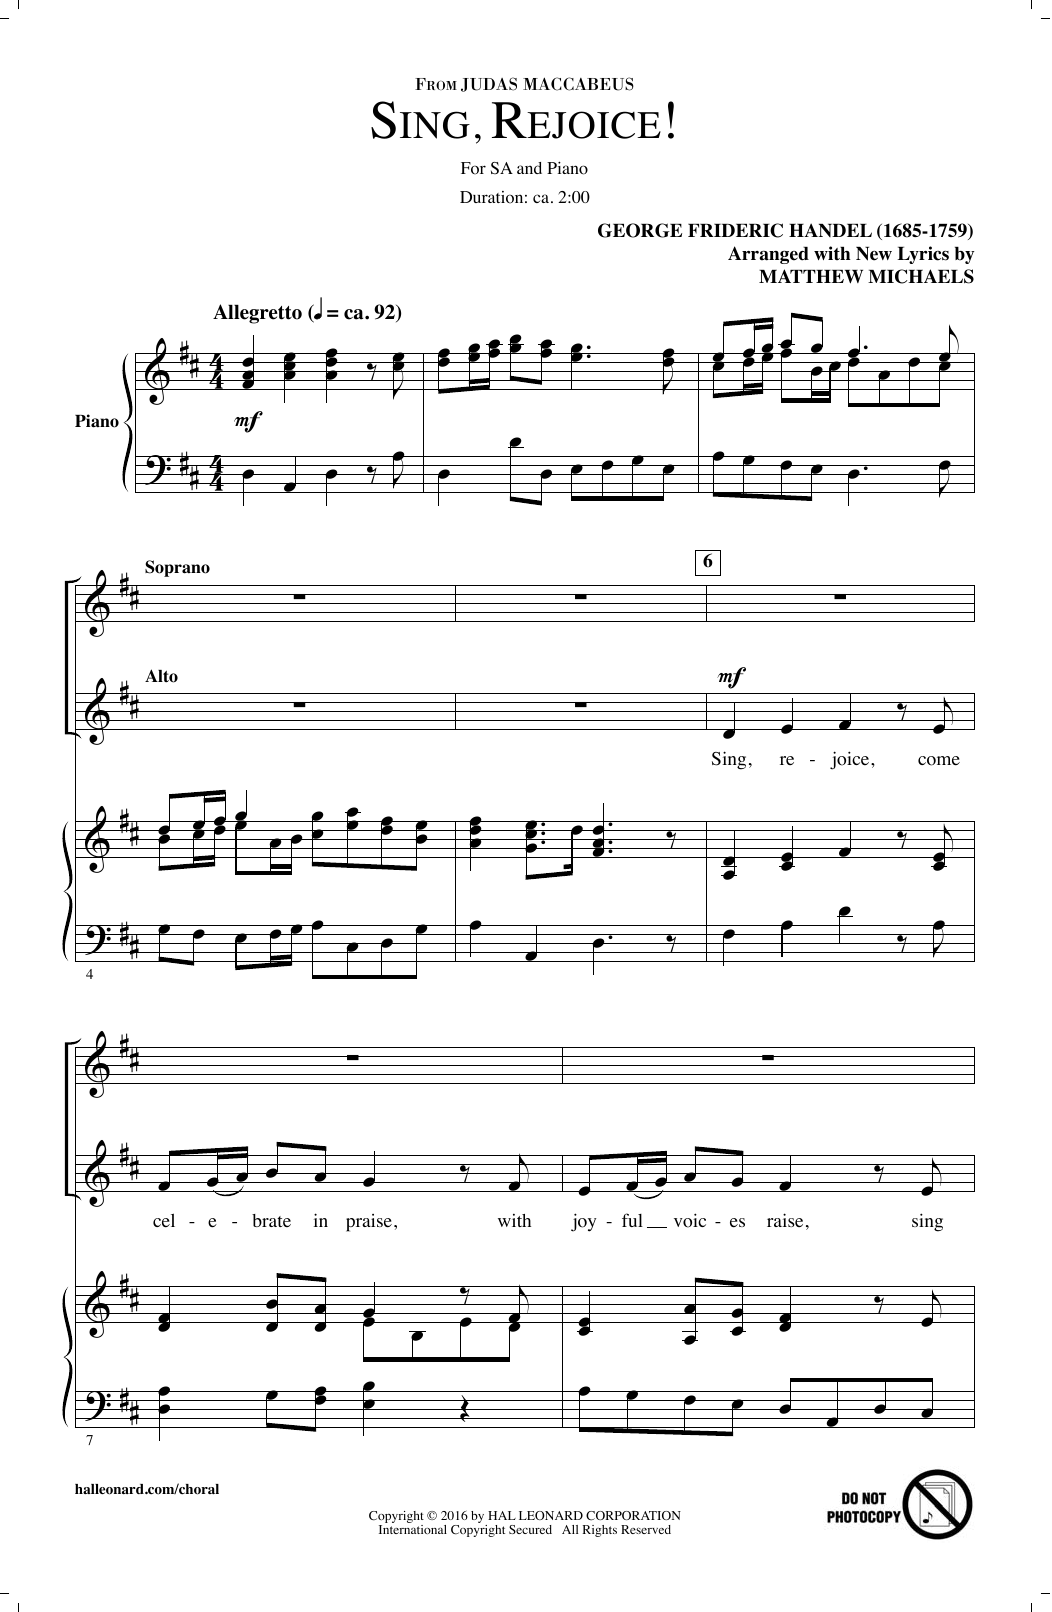 Matthew Michaels Sing, Rejoice! (from Judas Maccabaeus) Sheet Music Notes & Chords for SAB Choir - Download or Print PDF